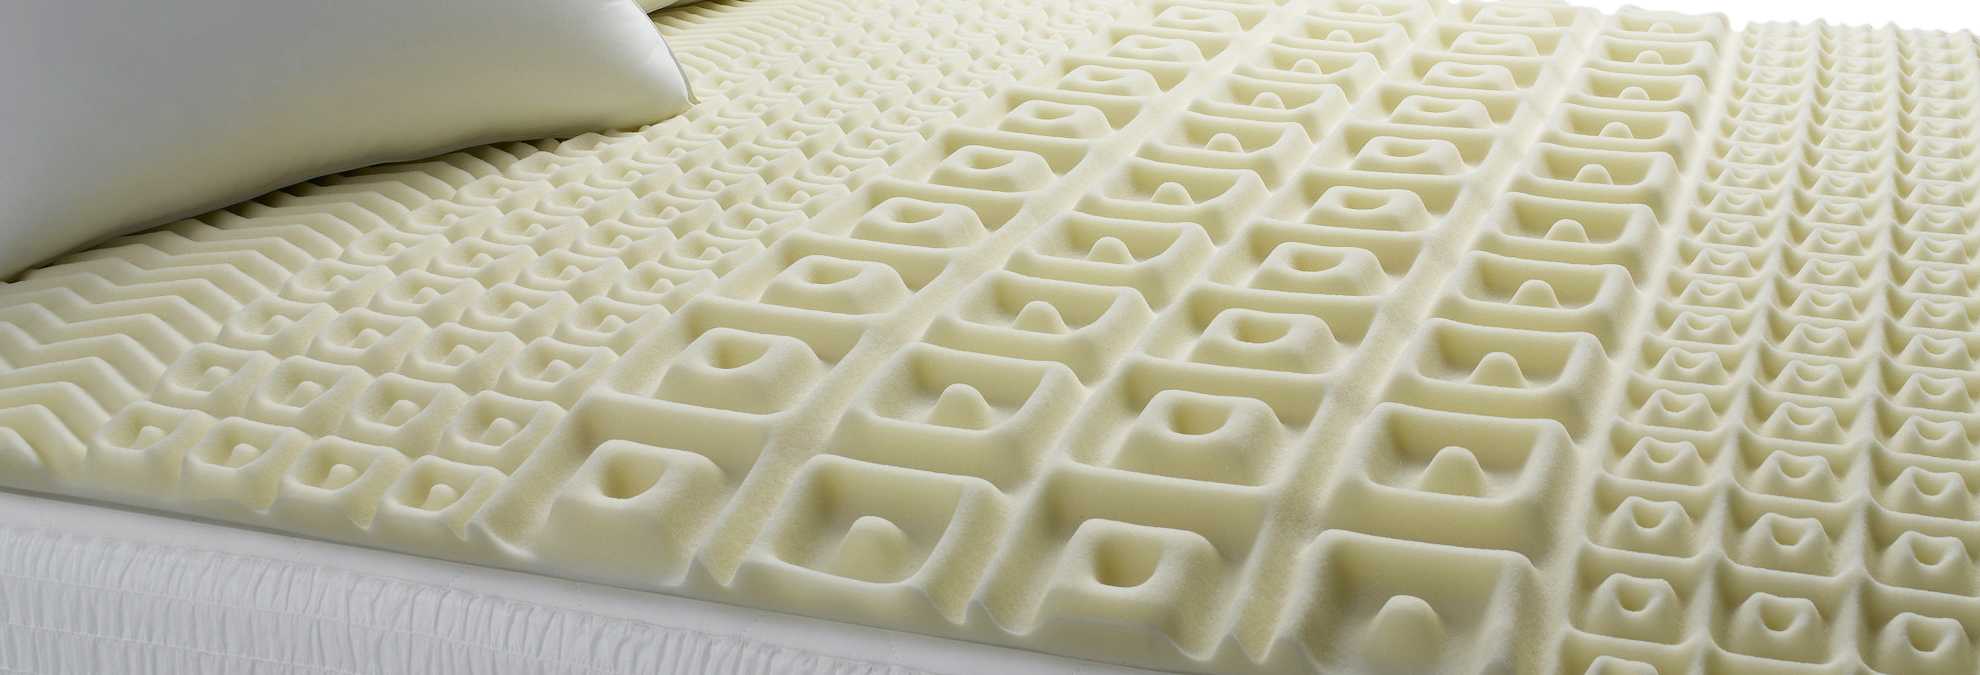 egg crate memory foam mattress for cot